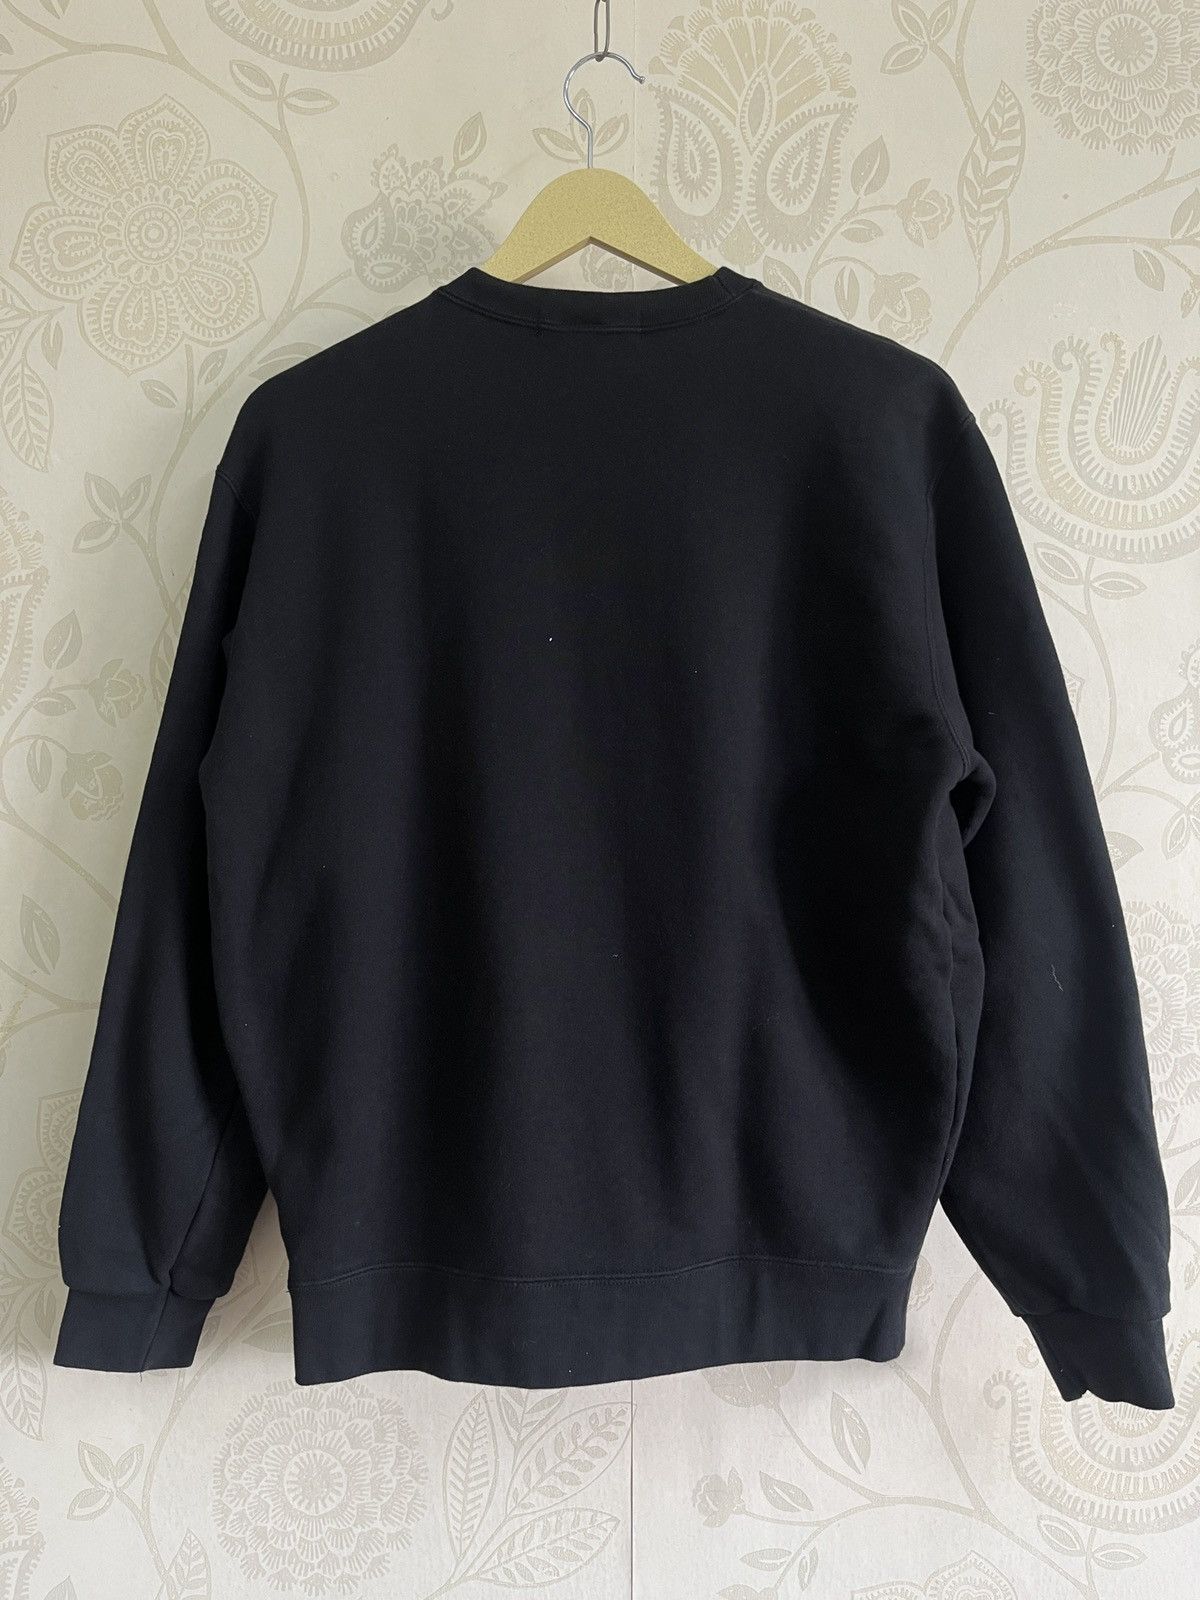 Designer - Rare Mini Teddy Bear Distressed Black Crewneck Sweater - 2